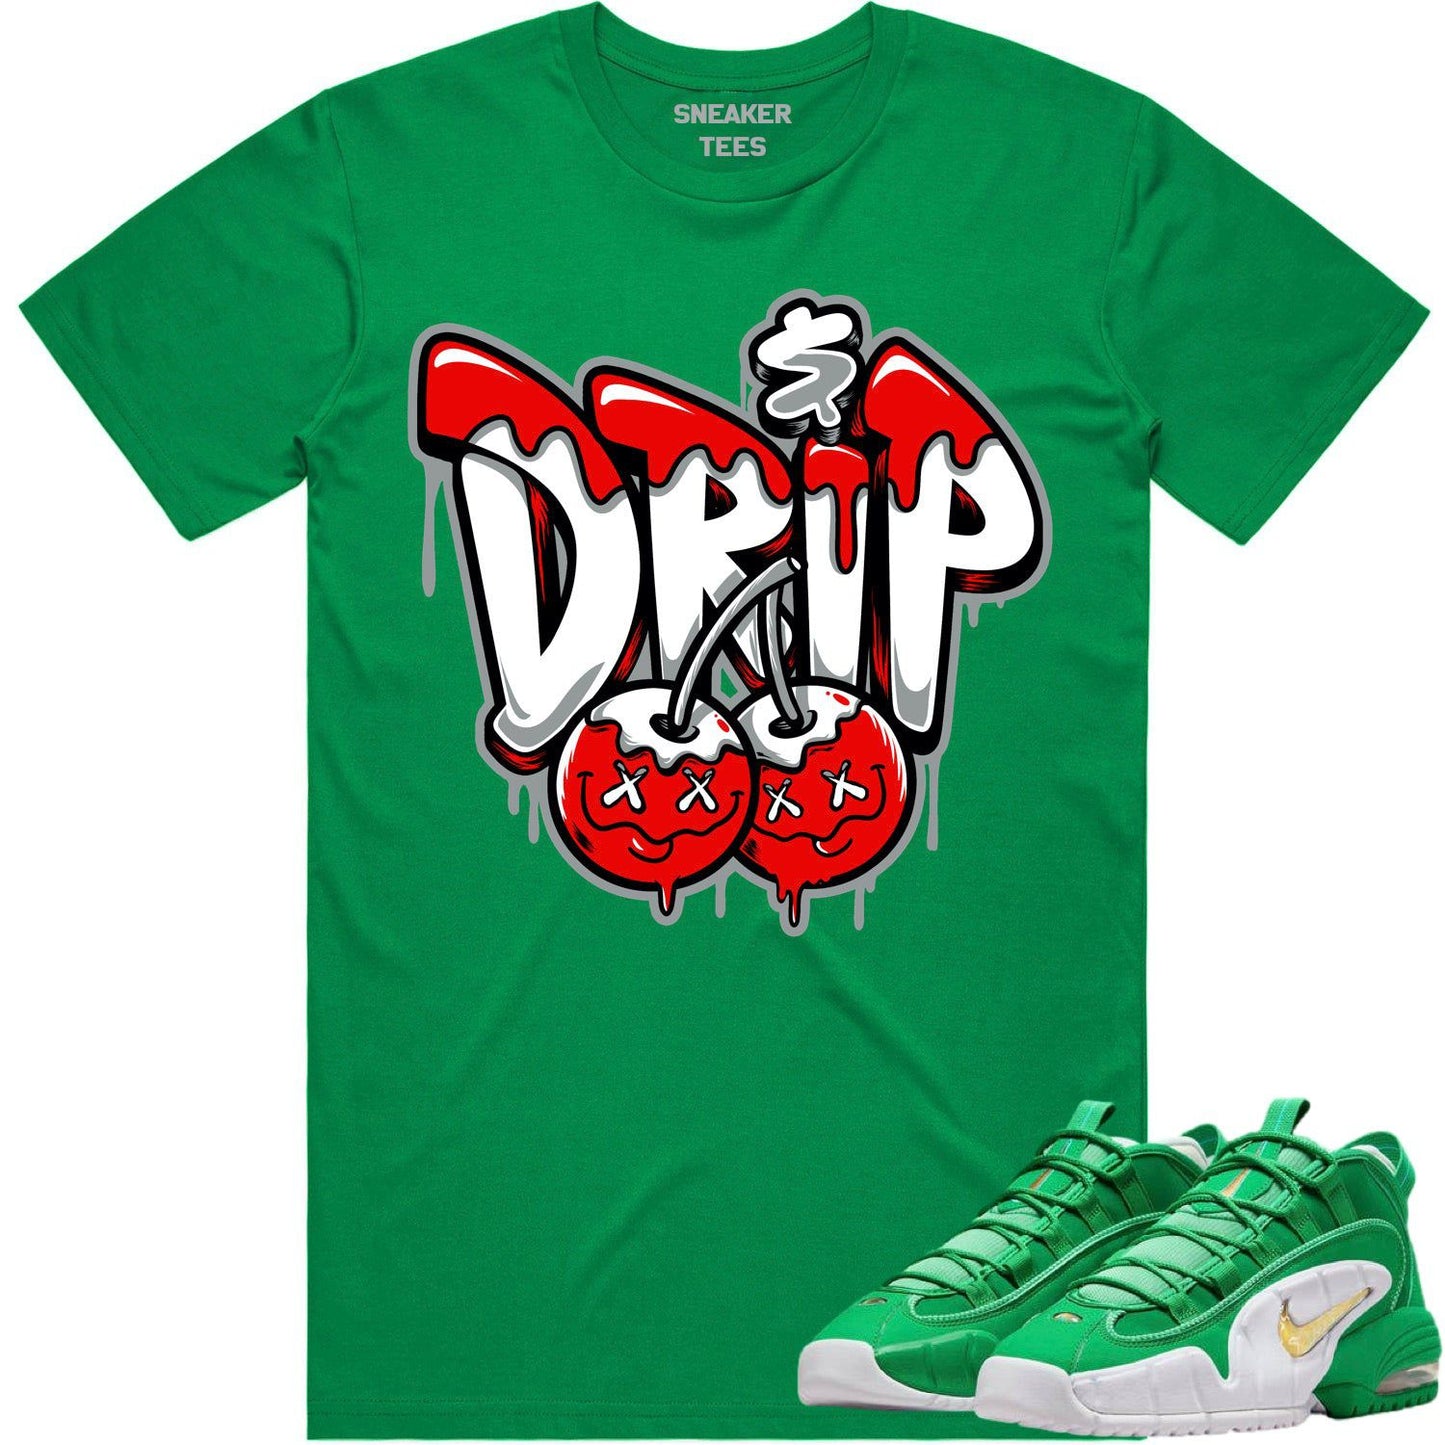 Penny 1 Stadium Green 1s Shirt - Sneaker Tees - Money Drip